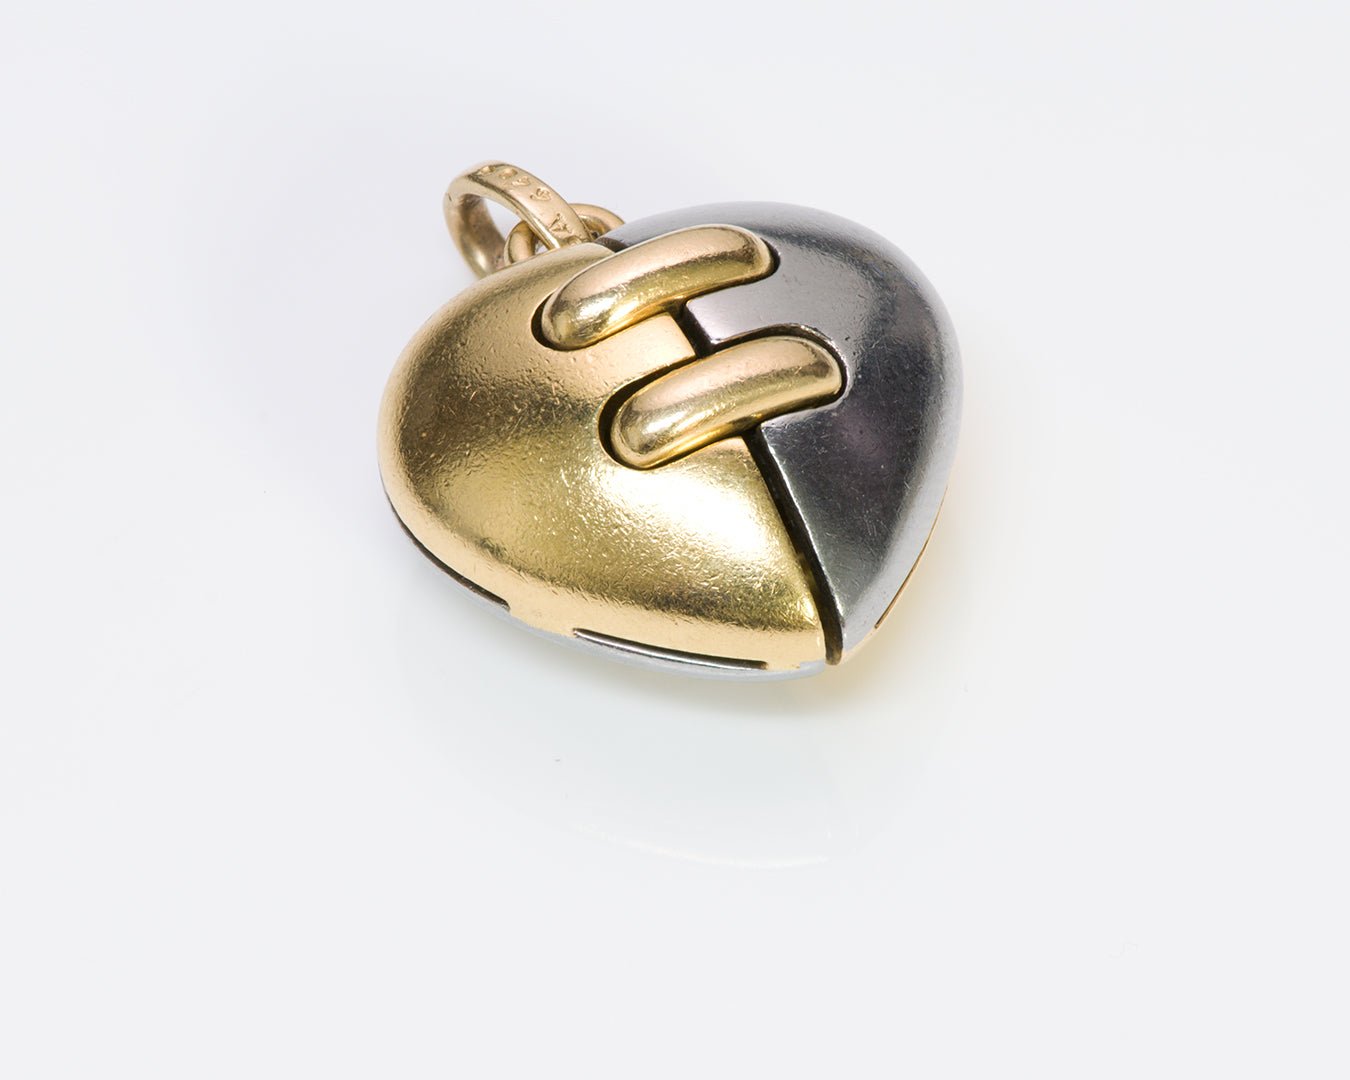 Bvlgari 18K Gold Puffed Heart Pendant